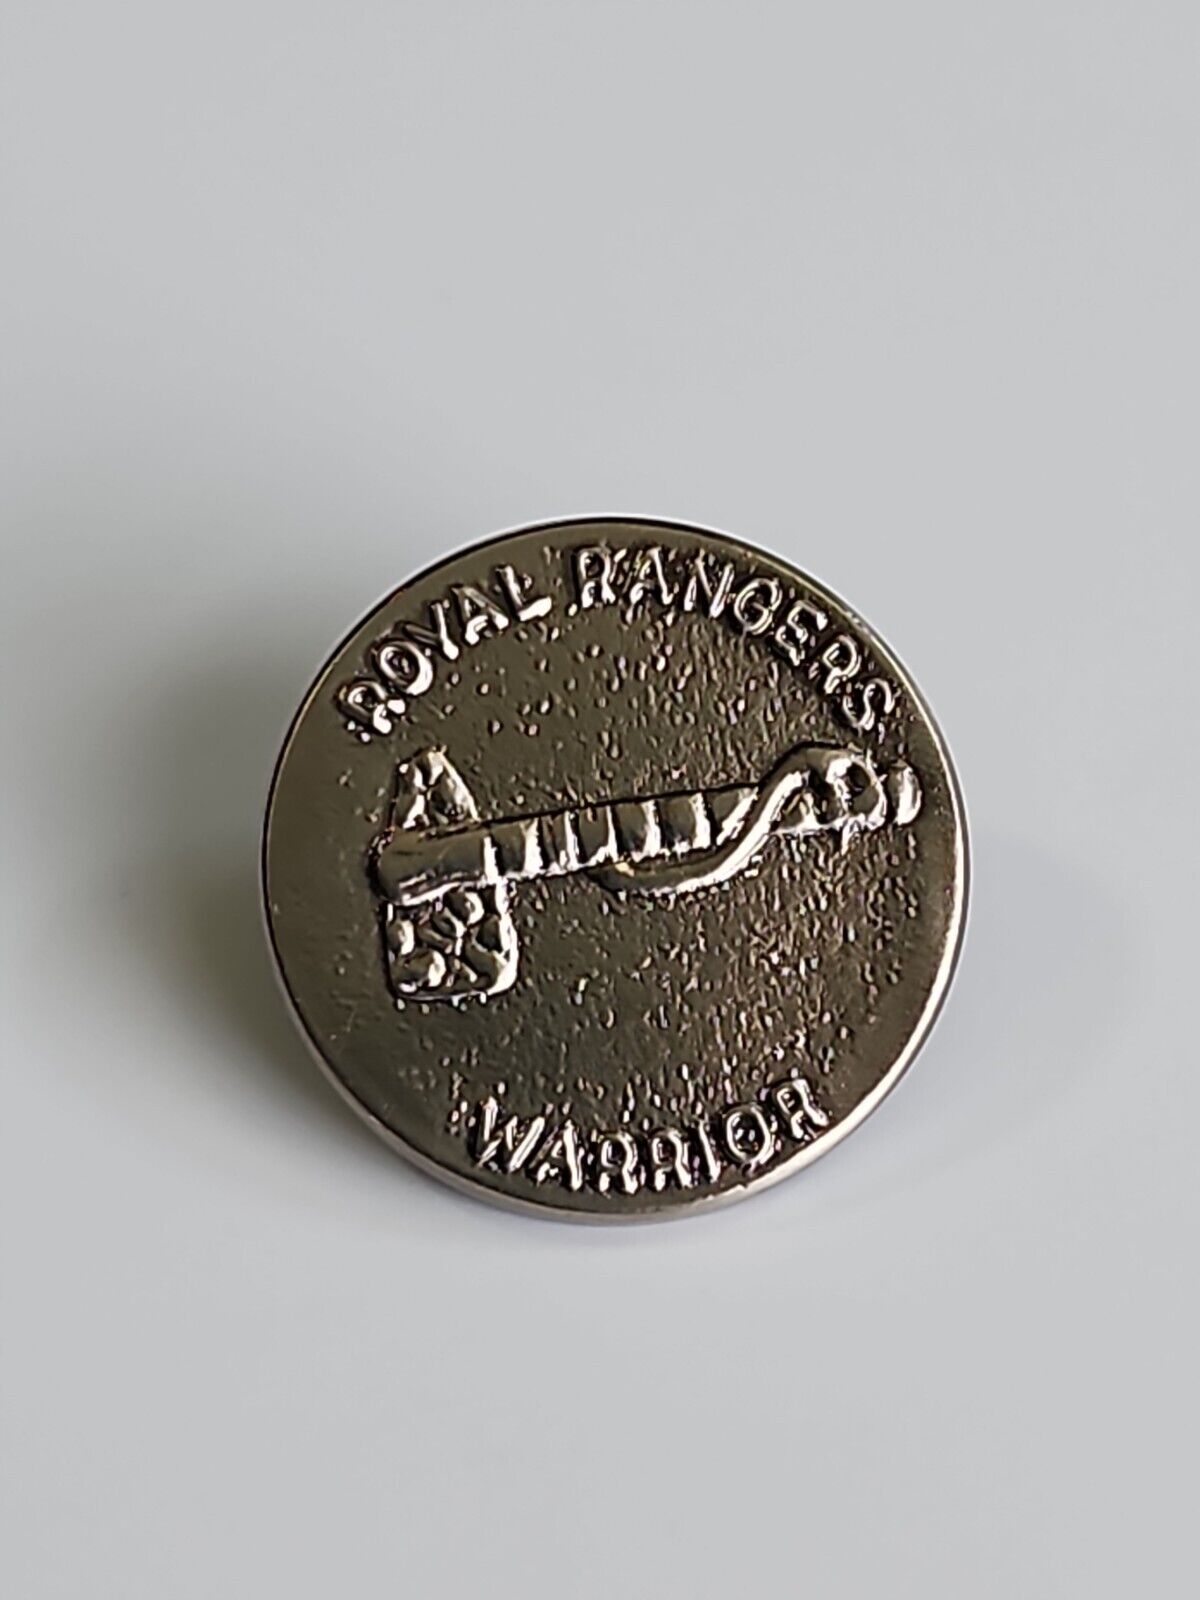 Royal Rangers Warrior Merit Award Lapel Pin Silver Color Metal Tomahawk